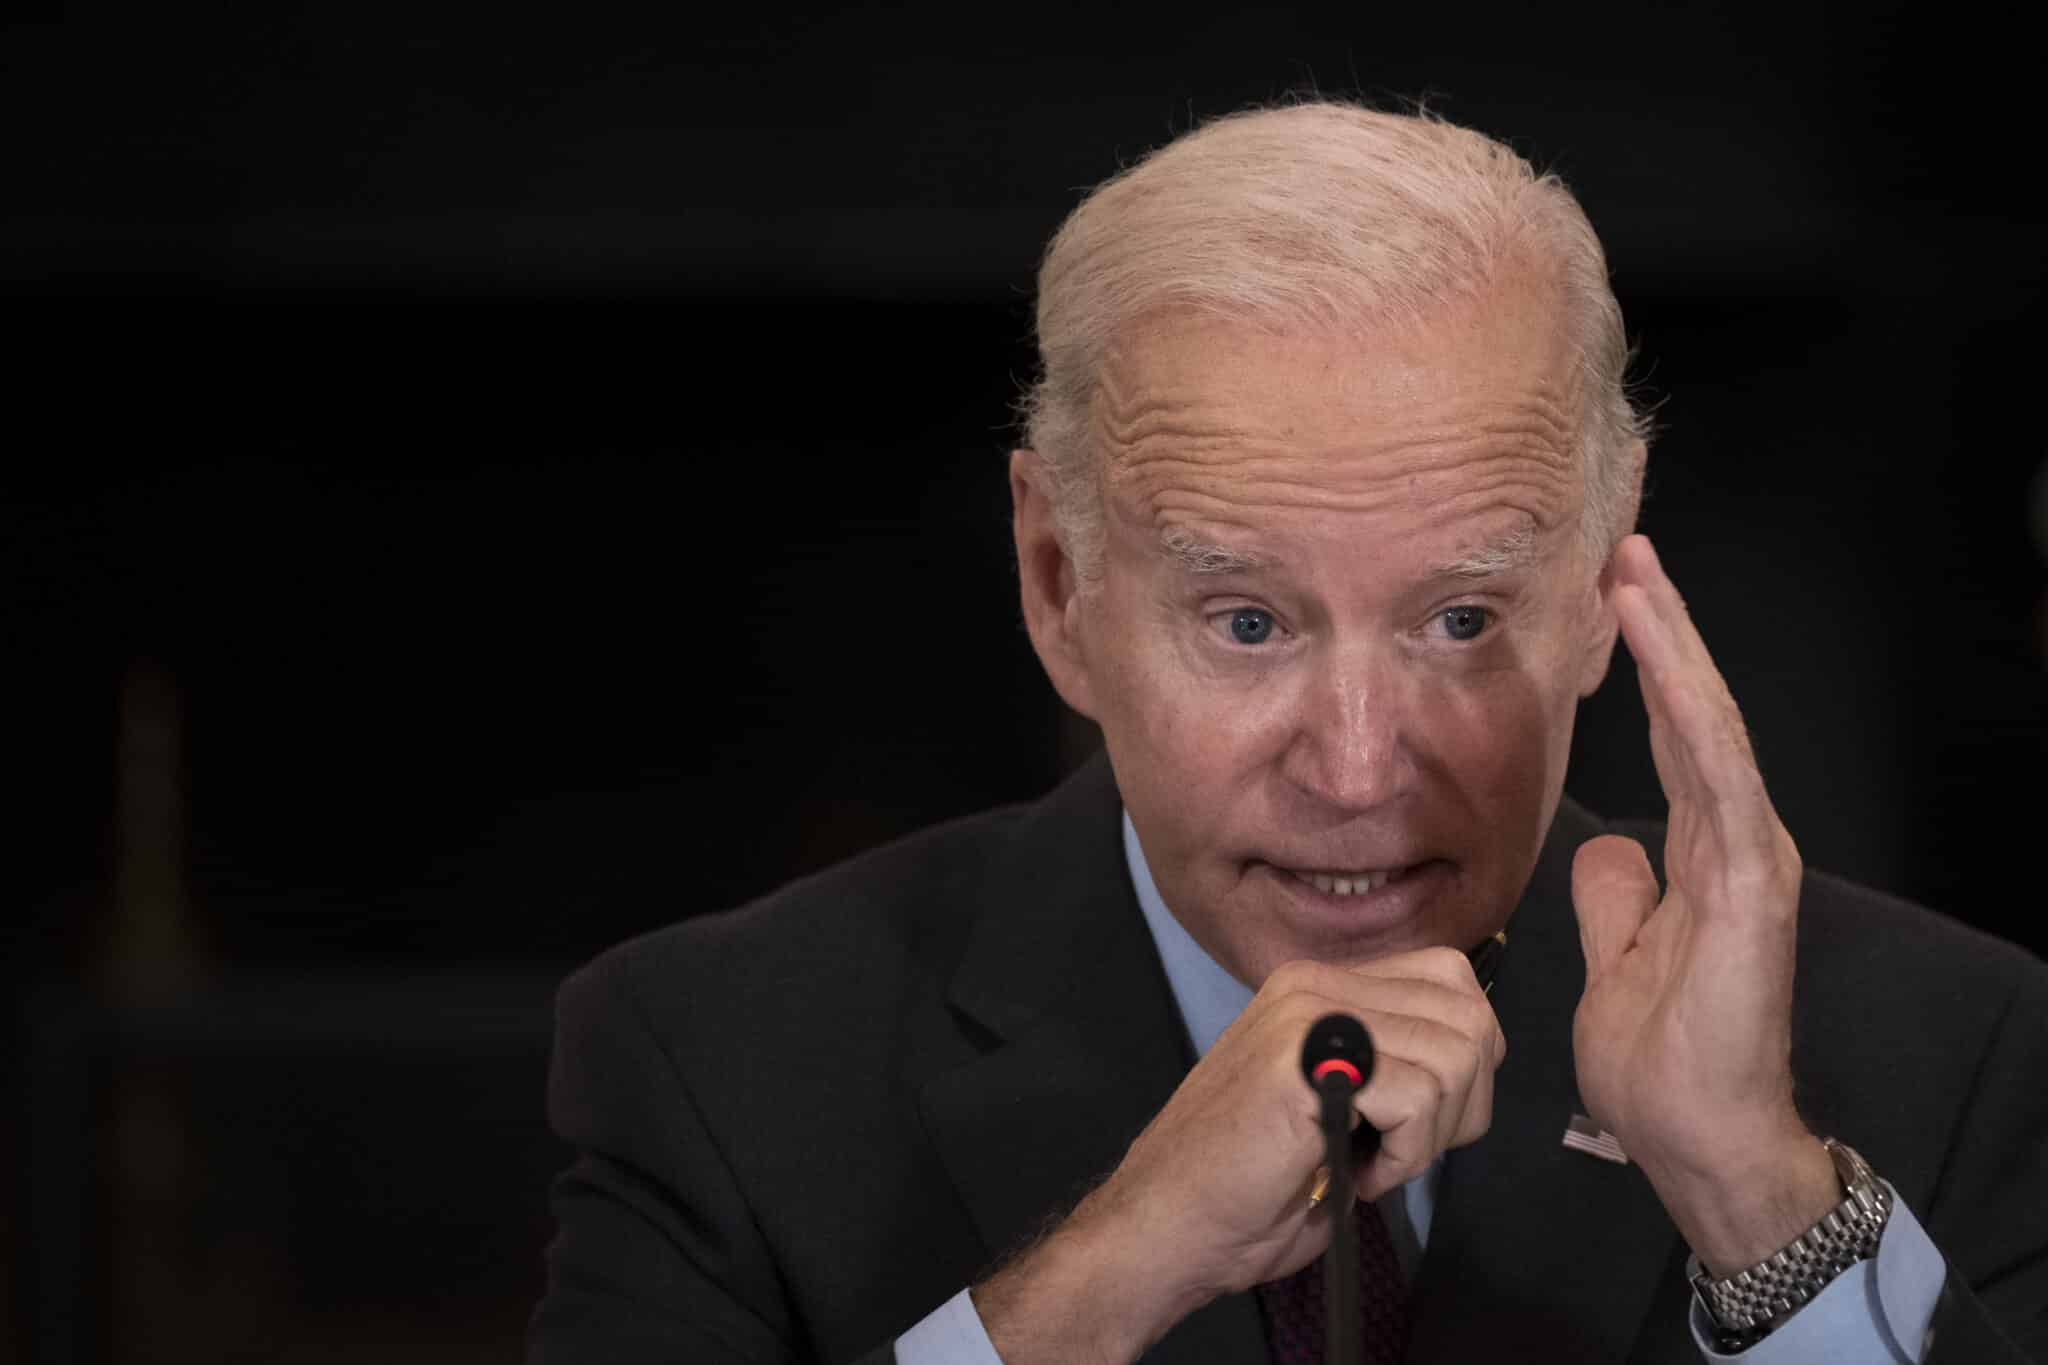 Joe Biden urged to investigate ‘dangerous’ transphobic bomb threats against hospitals